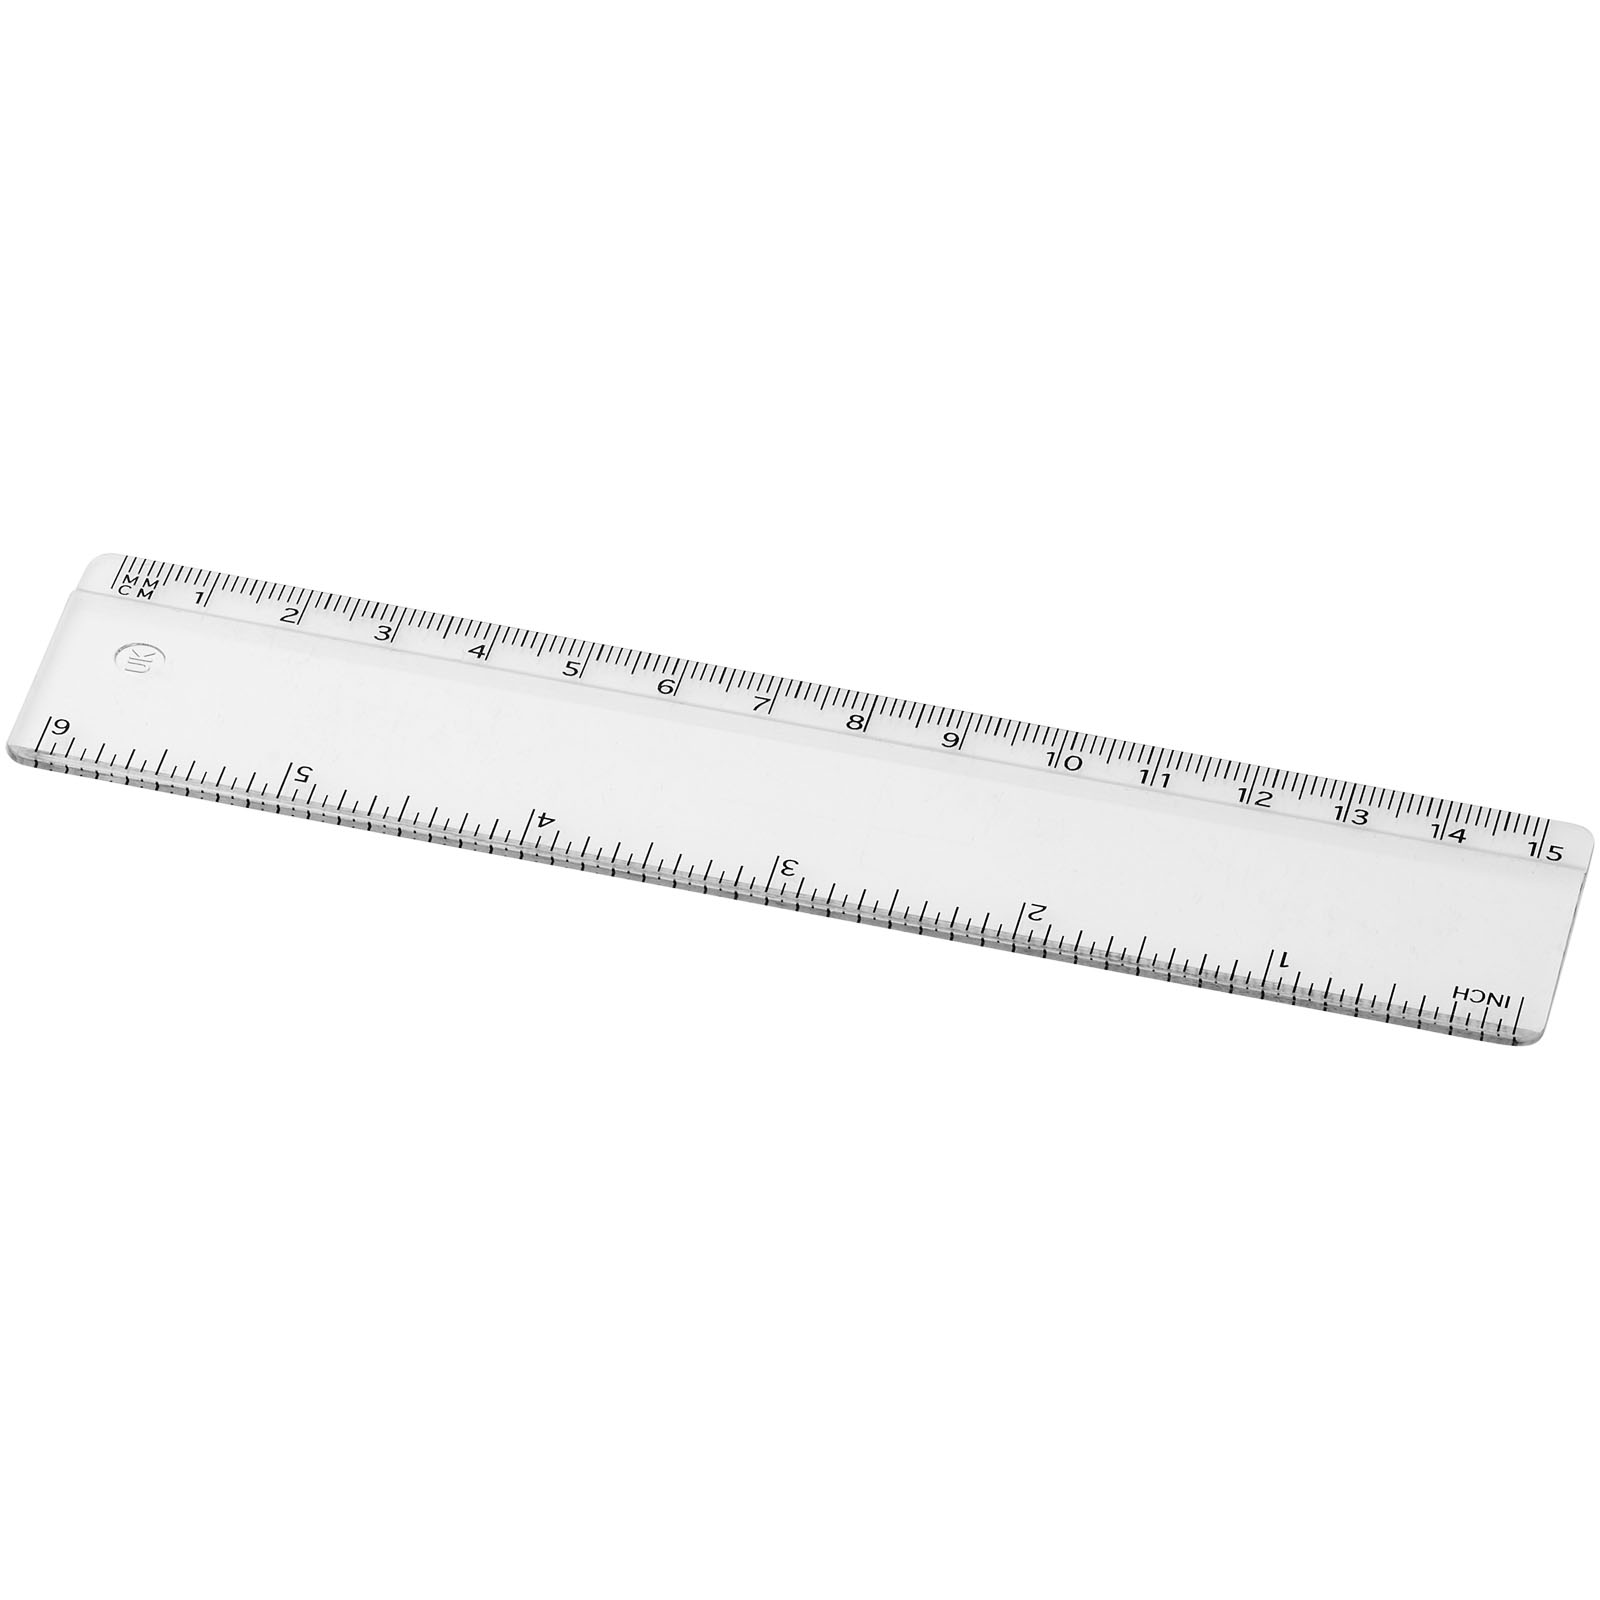 Advertising Desk Accessories - Renzo 15 cm plastic ruler